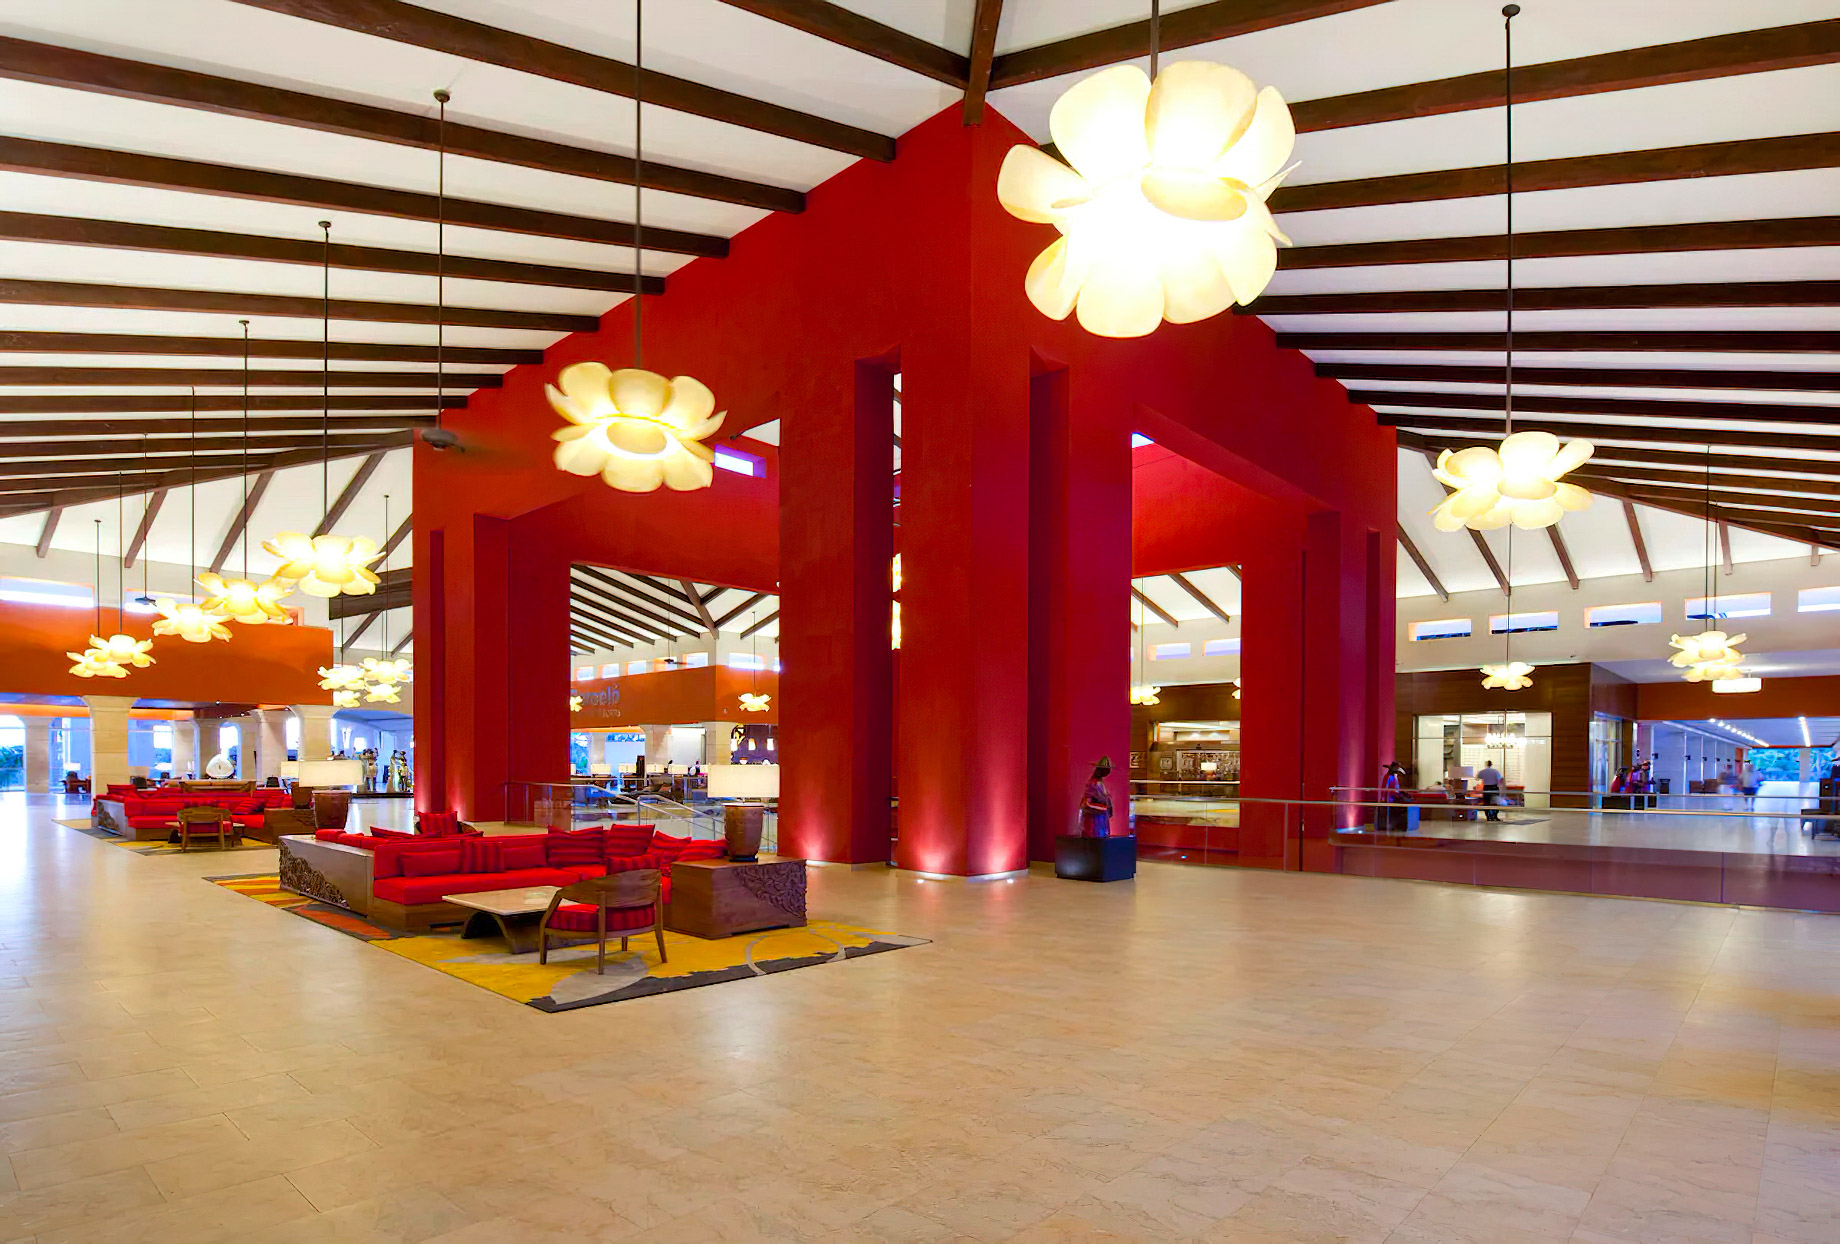 Barceló Bávaro Palace Hotel Grand Resort - Punta Cana, Dominican Republic - Lobby